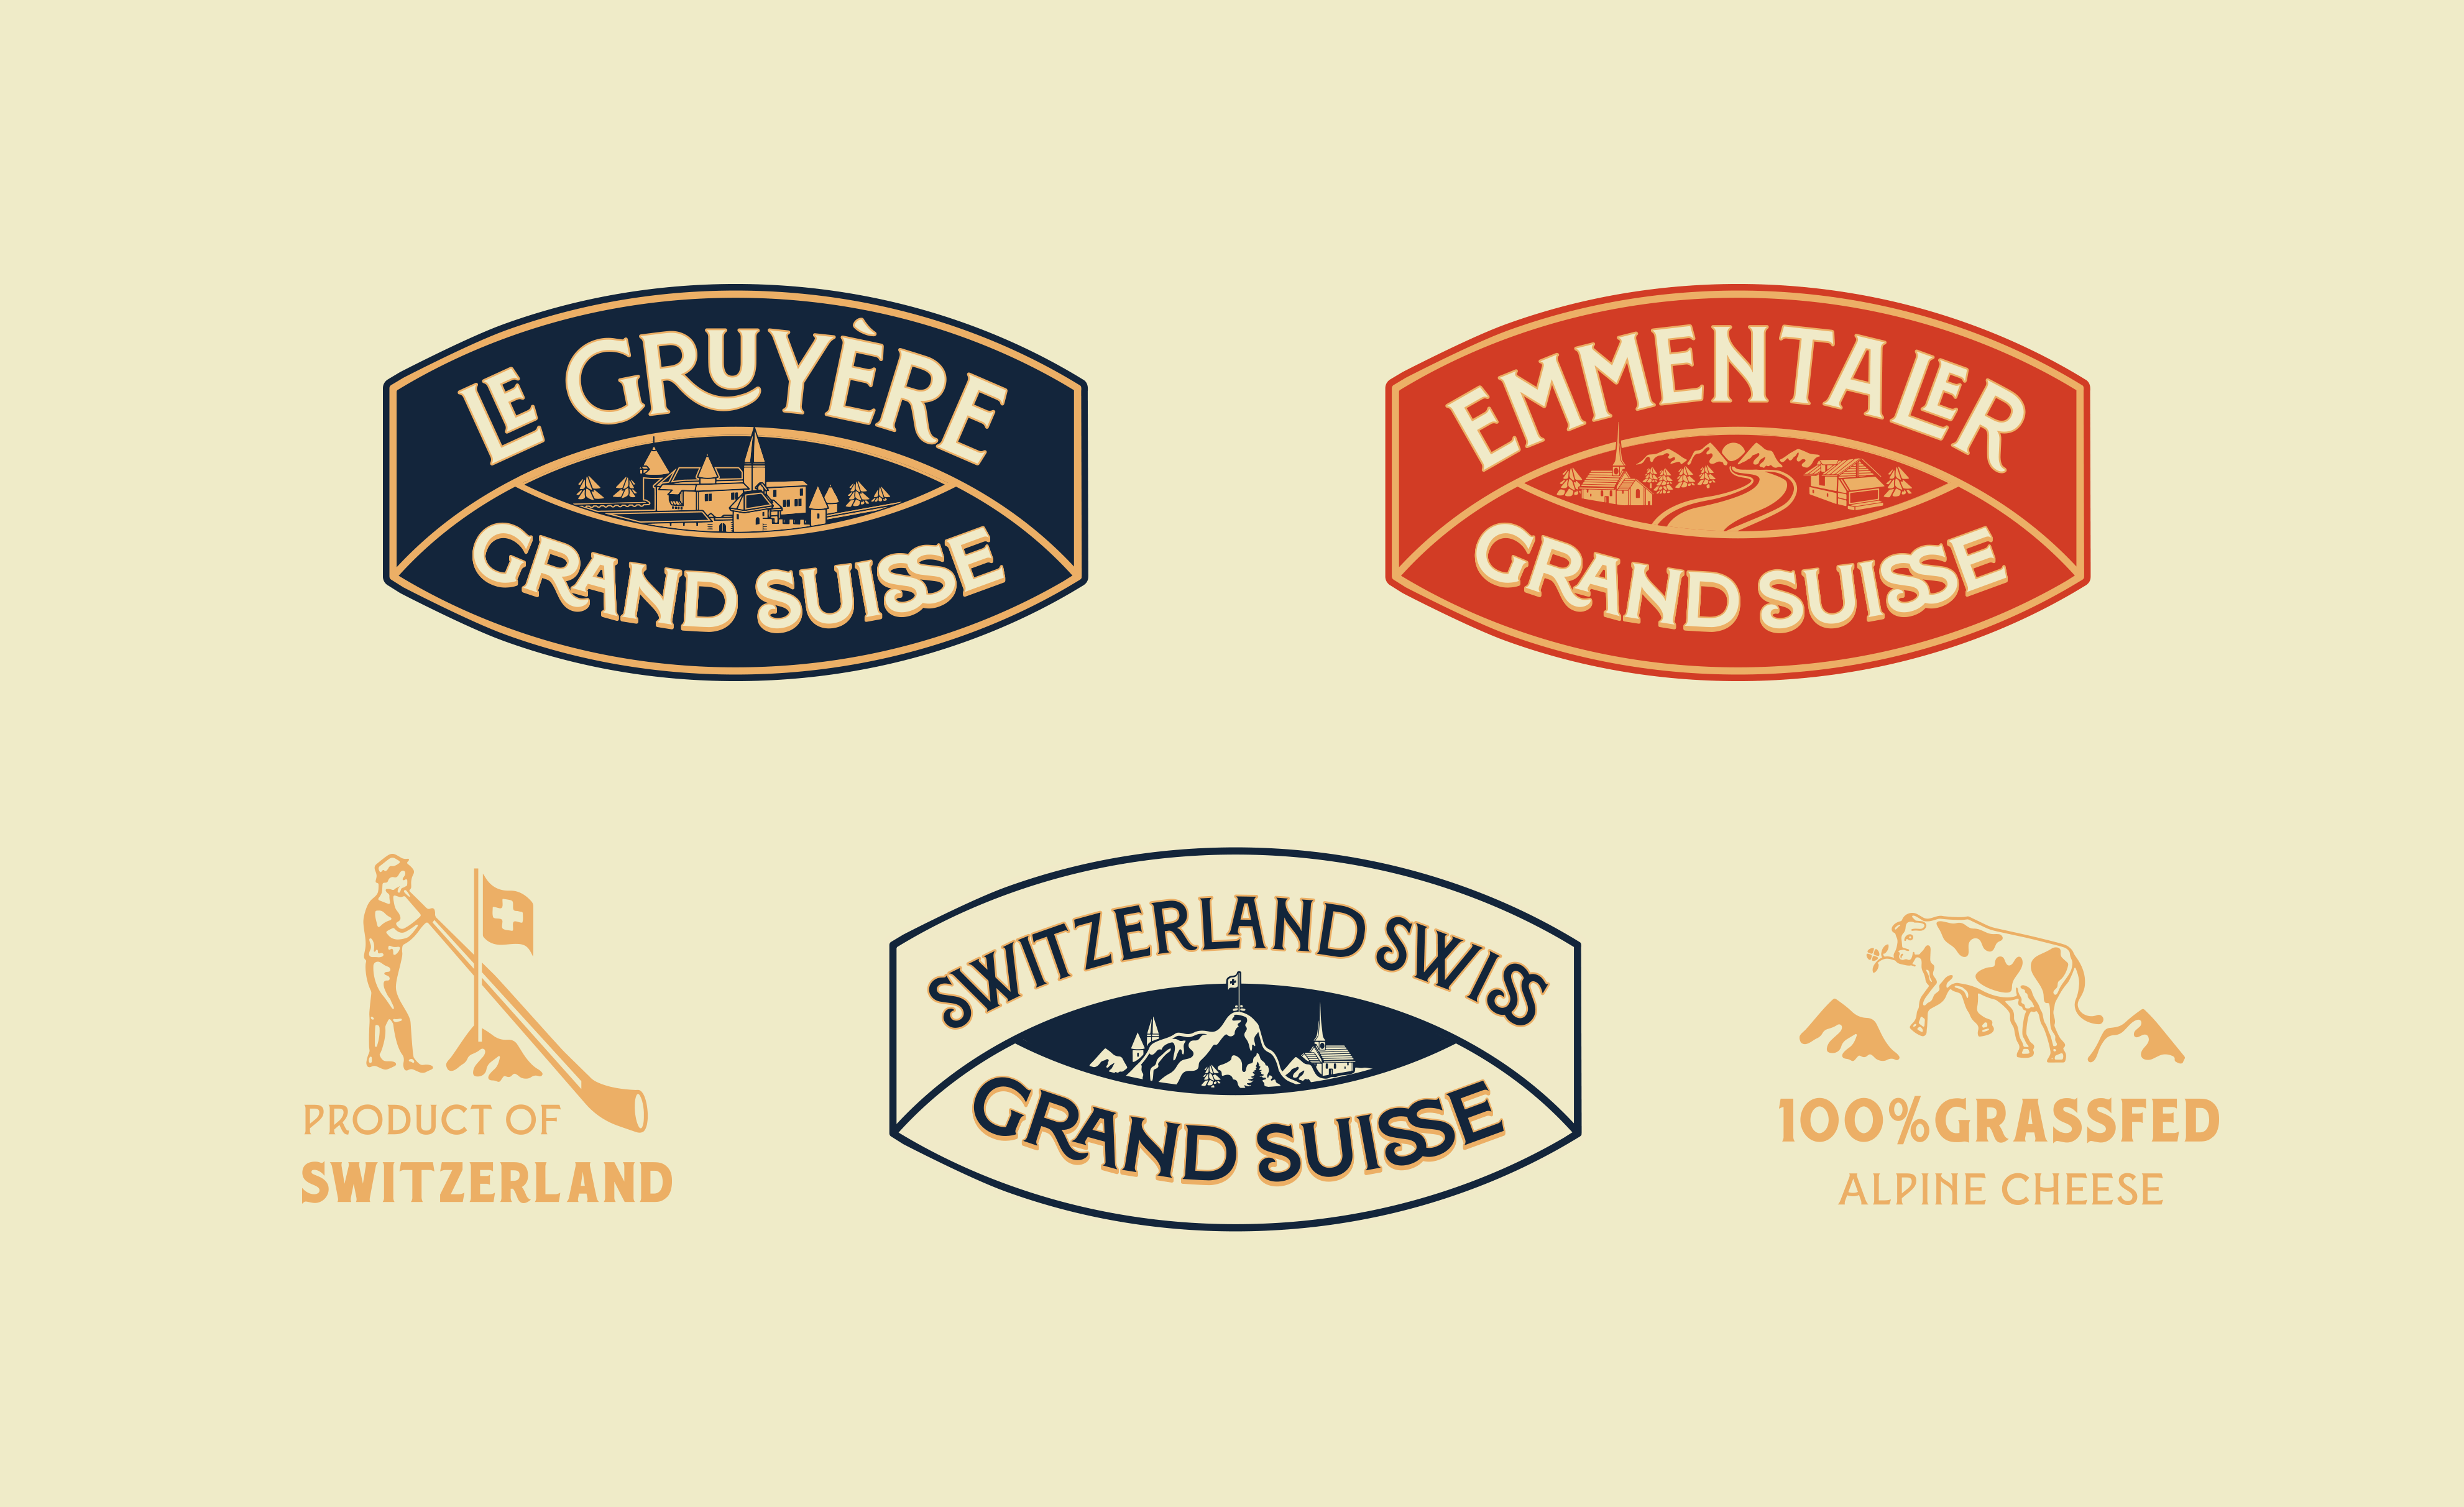 label-cheese-gif-emmentaler-flat-preview-grand-suisse-close-zeki-michael-design-branding-studio-packaging-red-copy-copy-copy